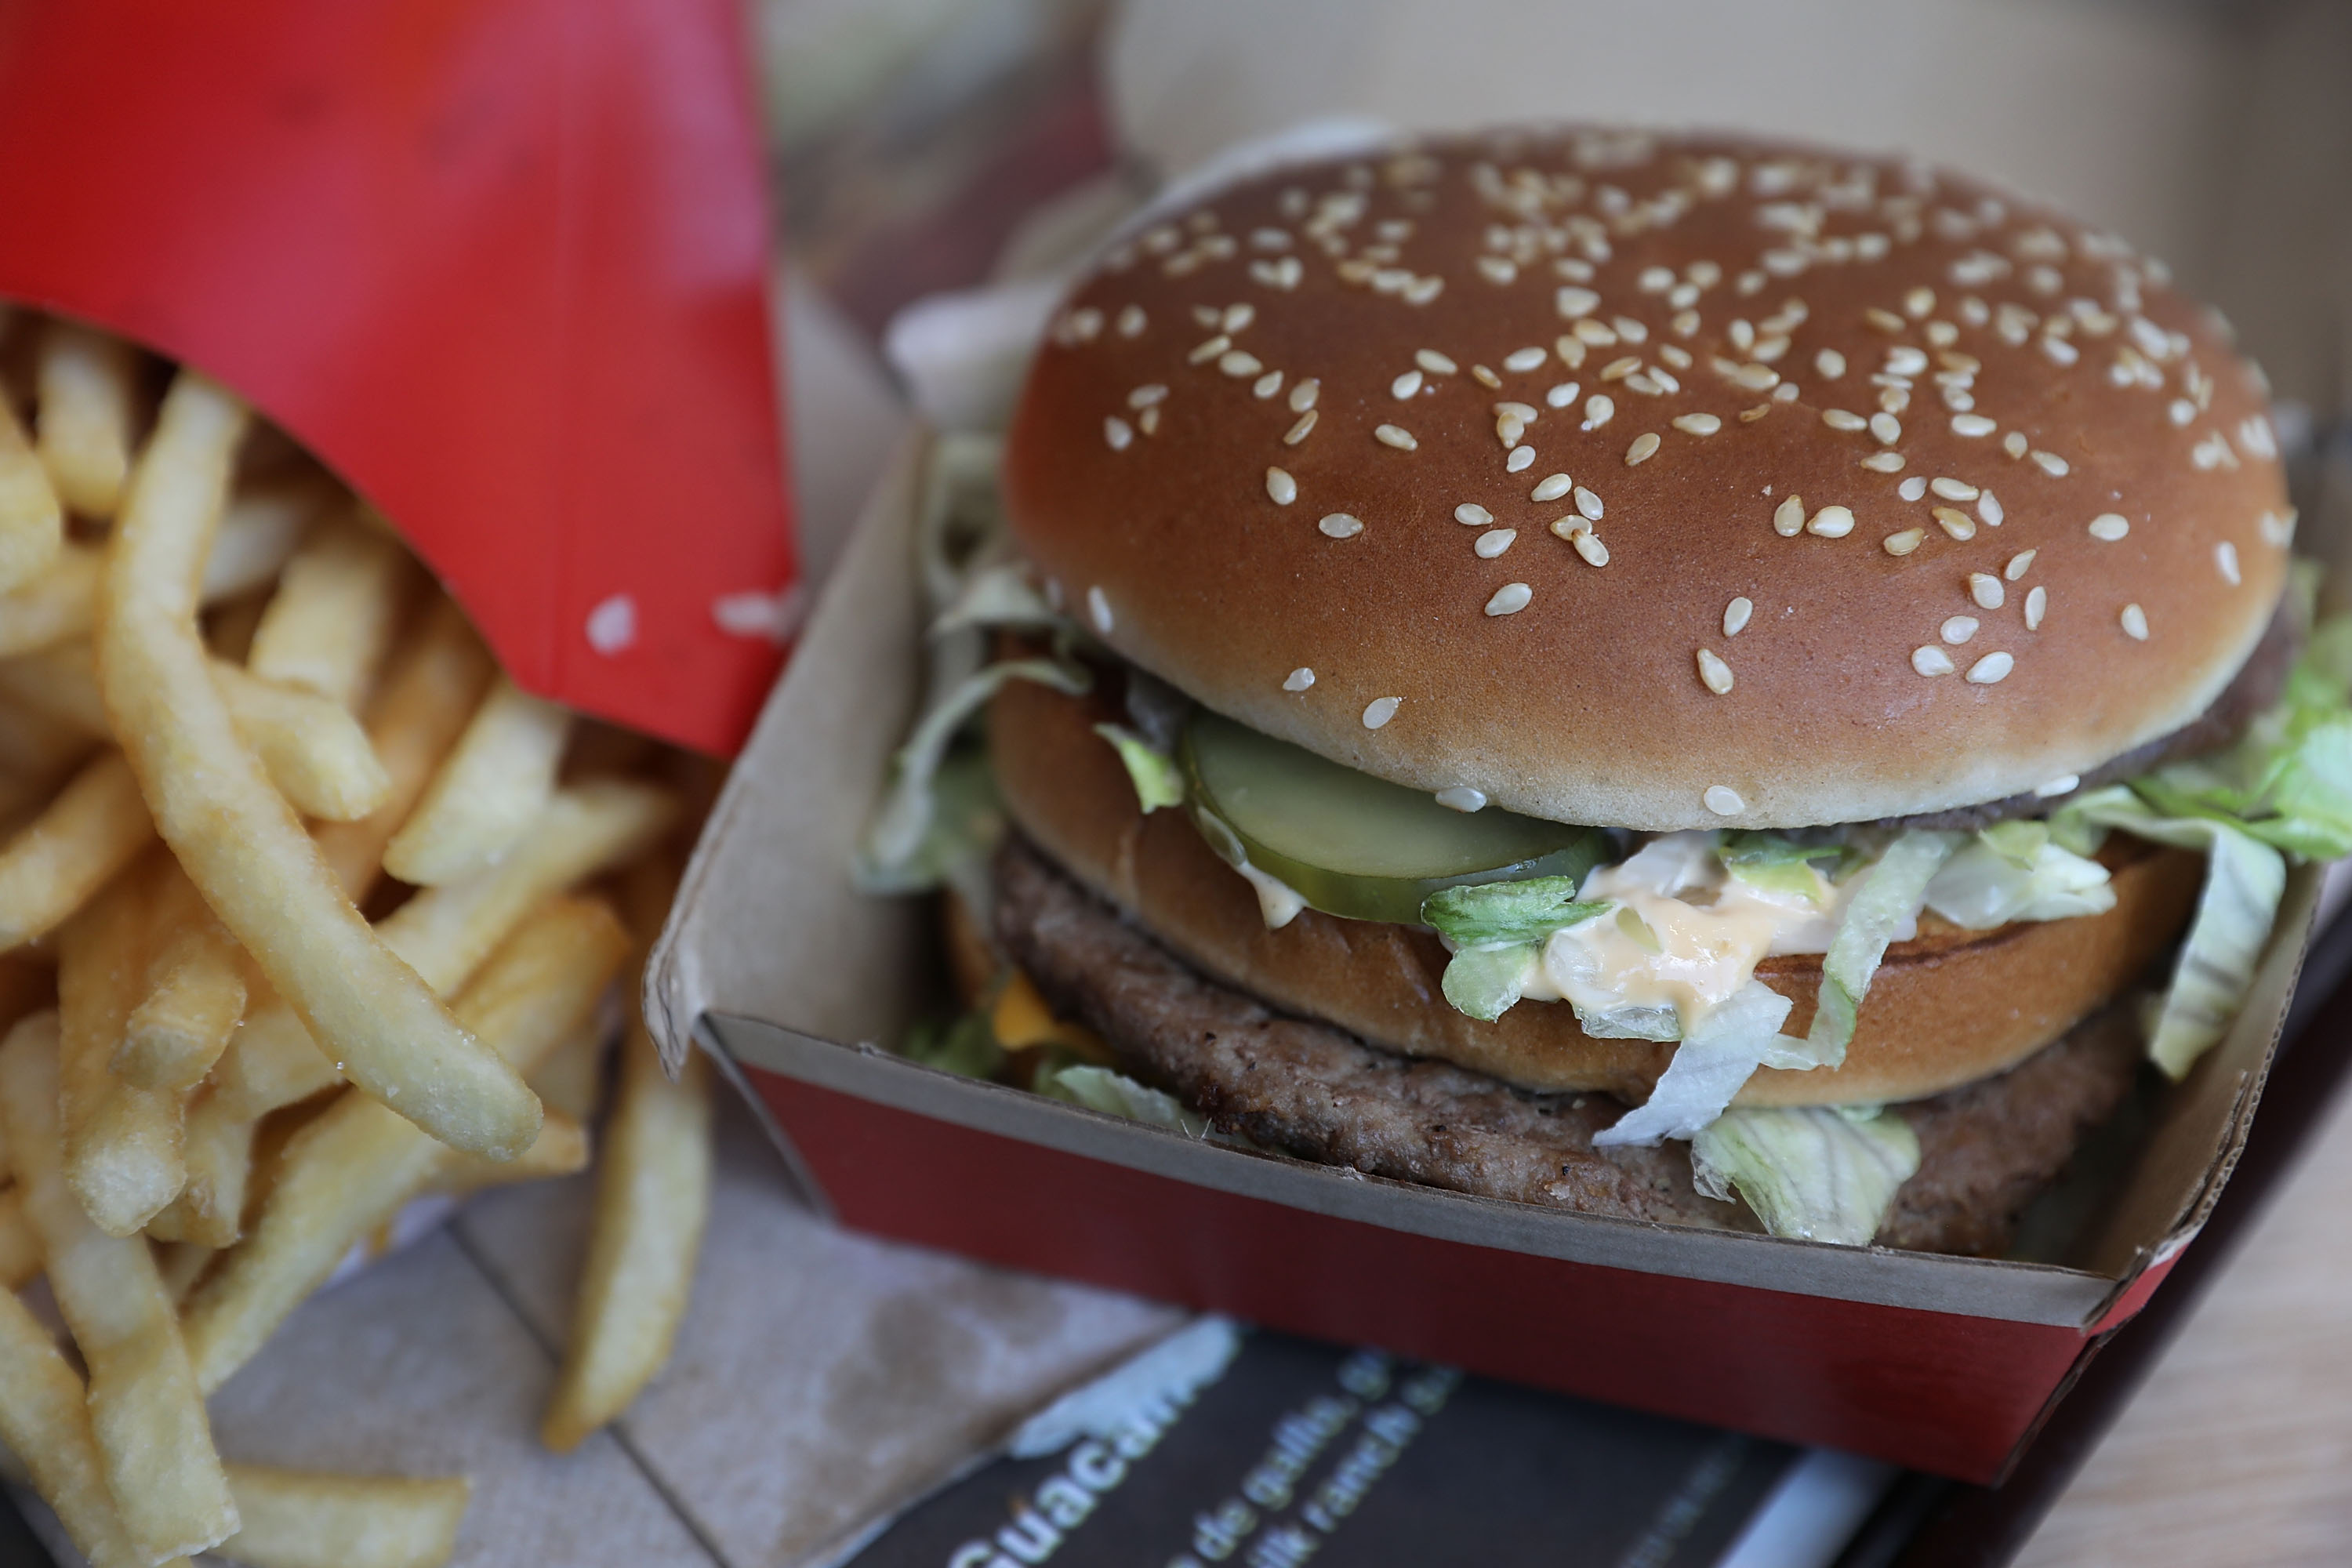 McDonalds Big Mac Deal for One Penny Order From DoorDash Money